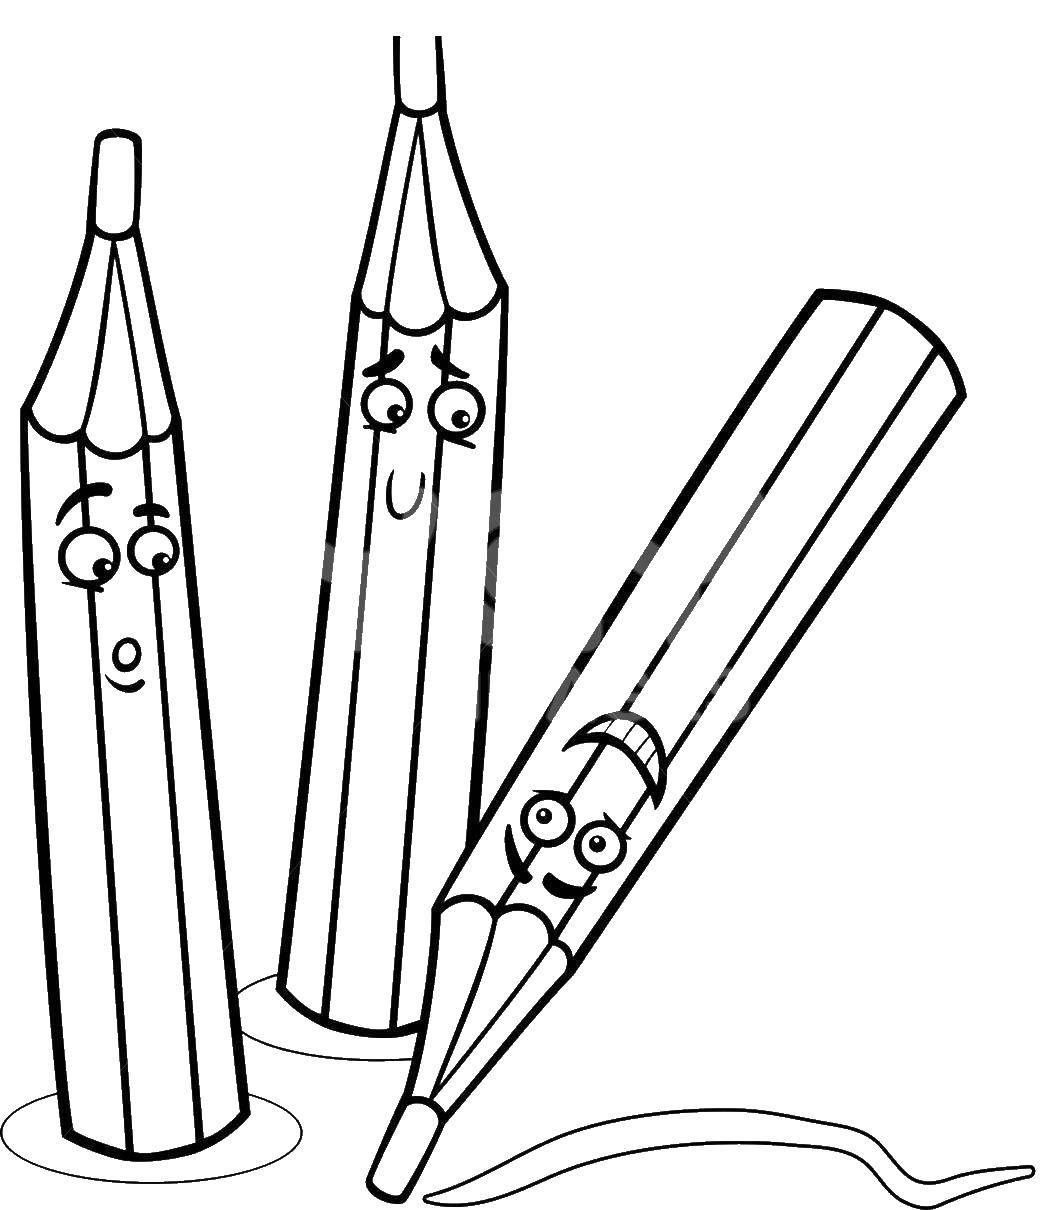 Coloring Pencils. Category school. Tags:  pencils.